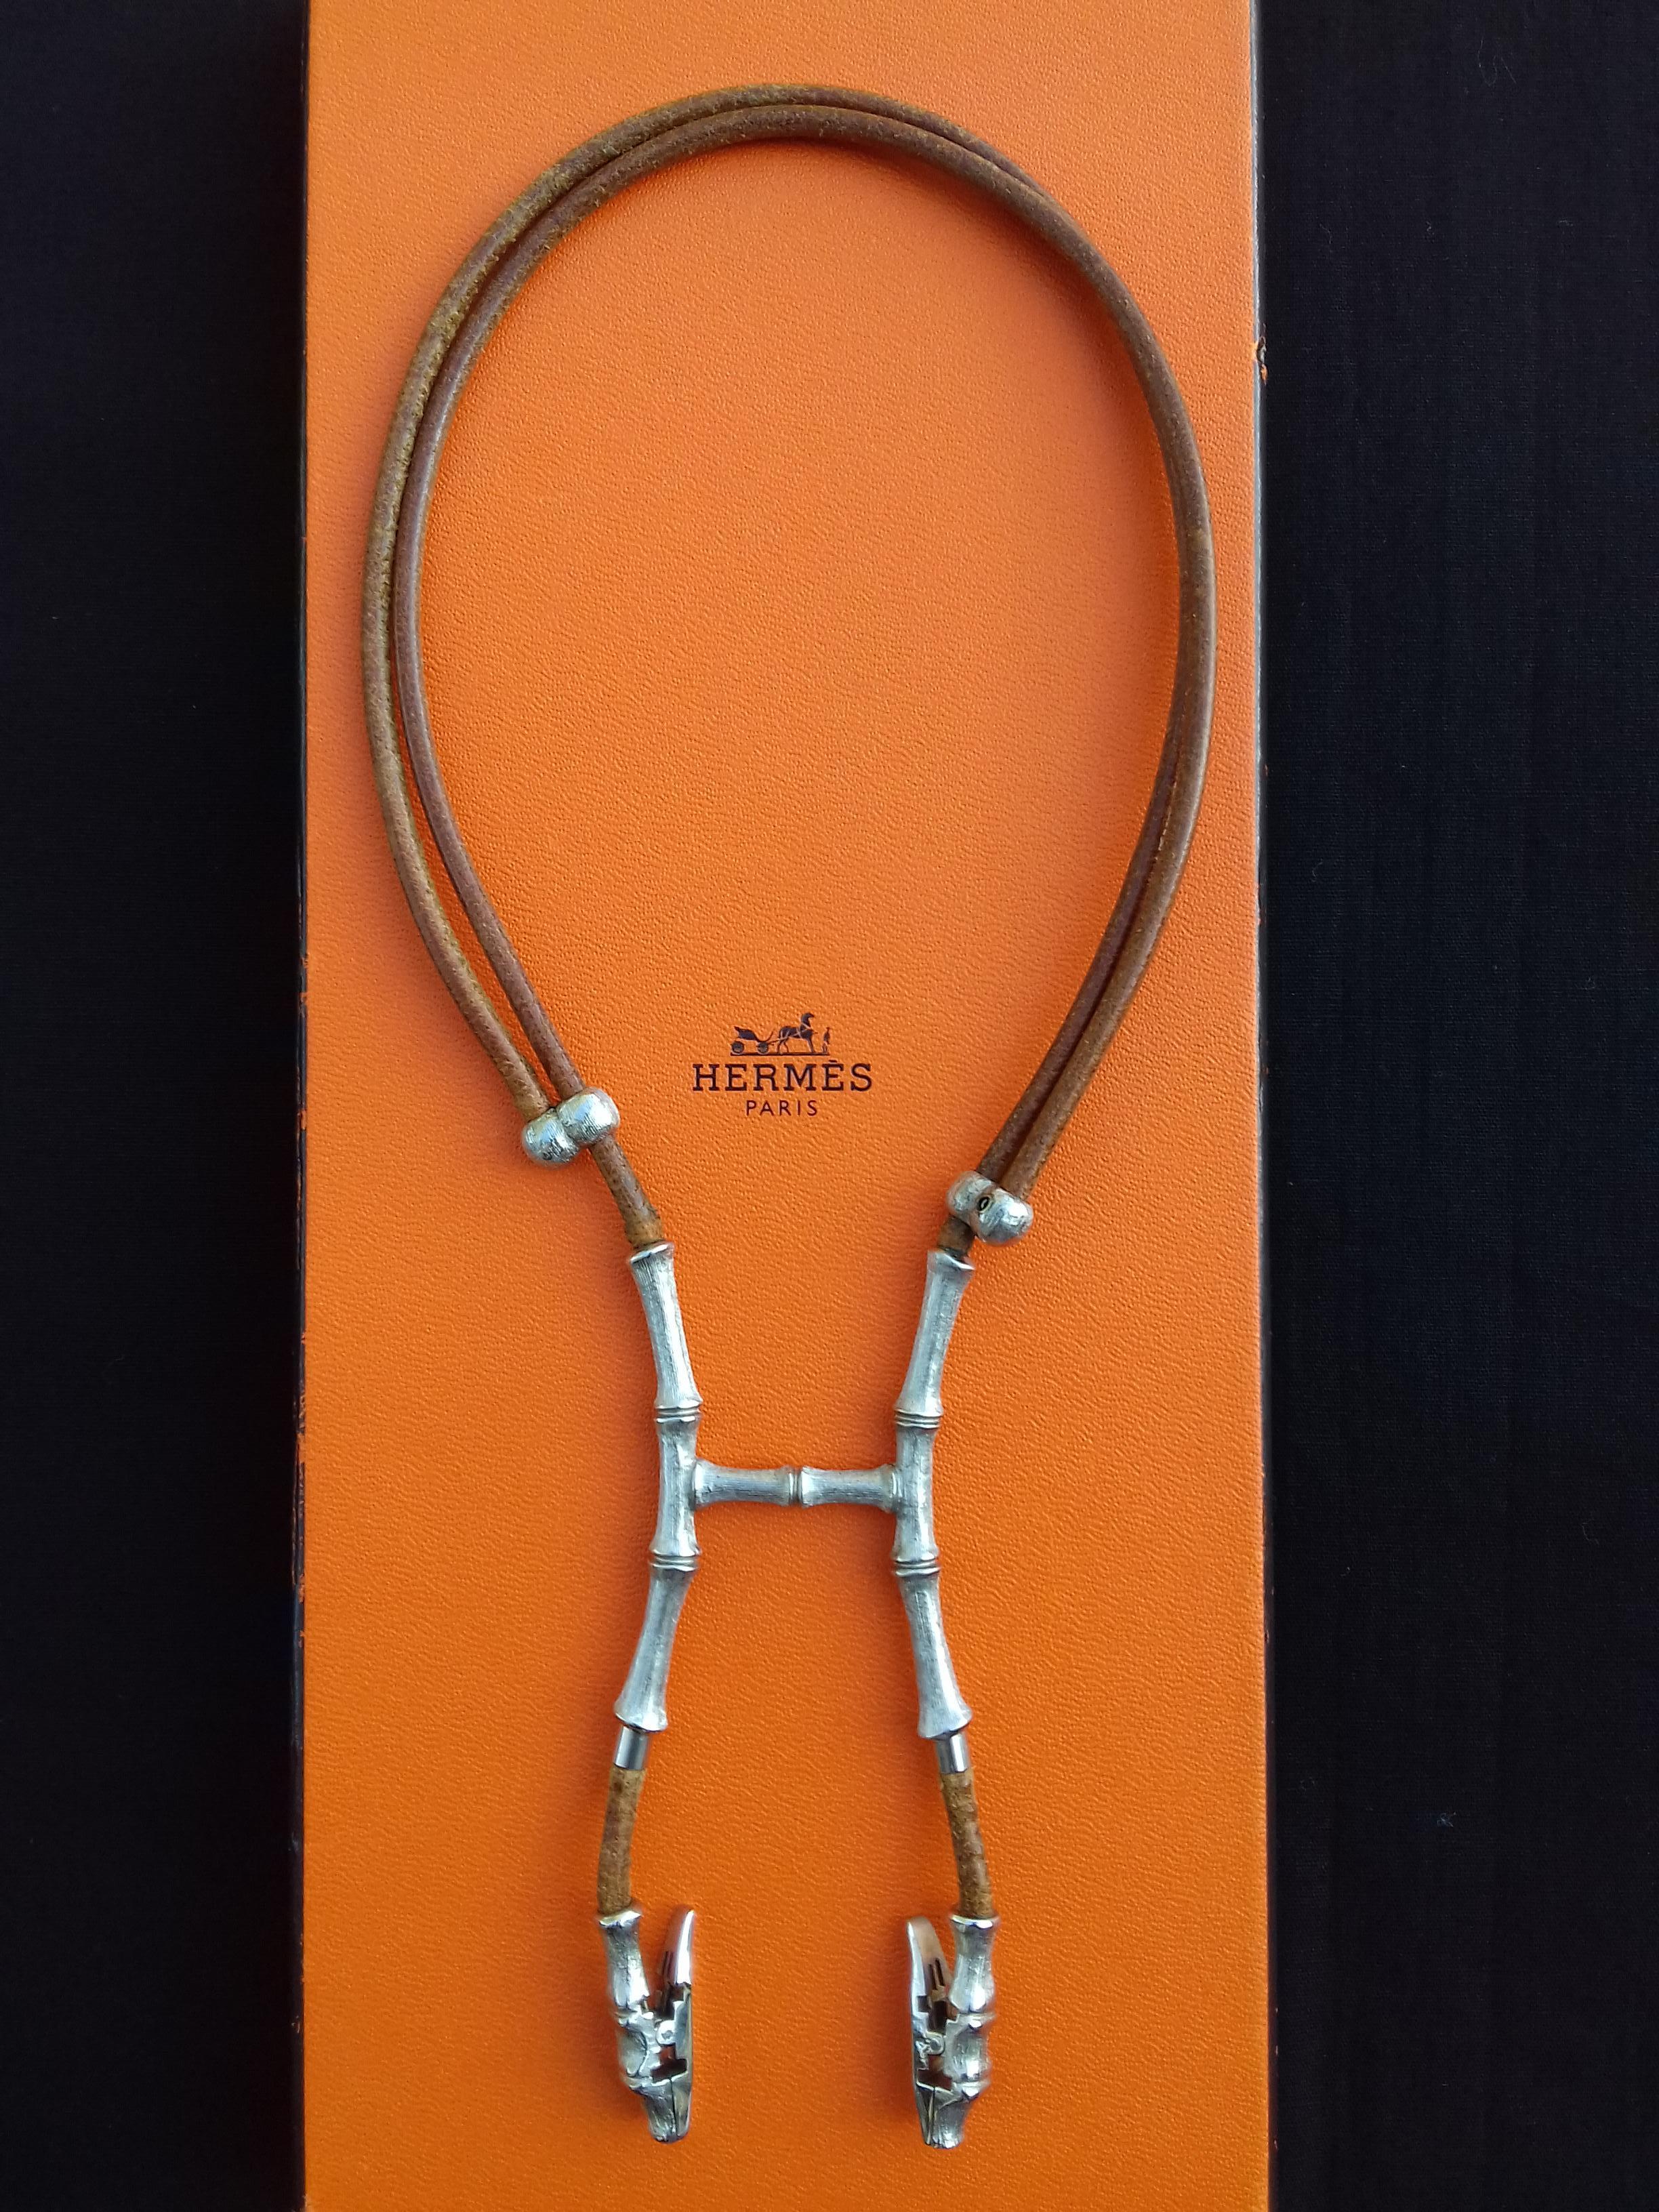 Hermès Paris Bambou Halter Necklace for scarf Collier Brown Leather RARE 6